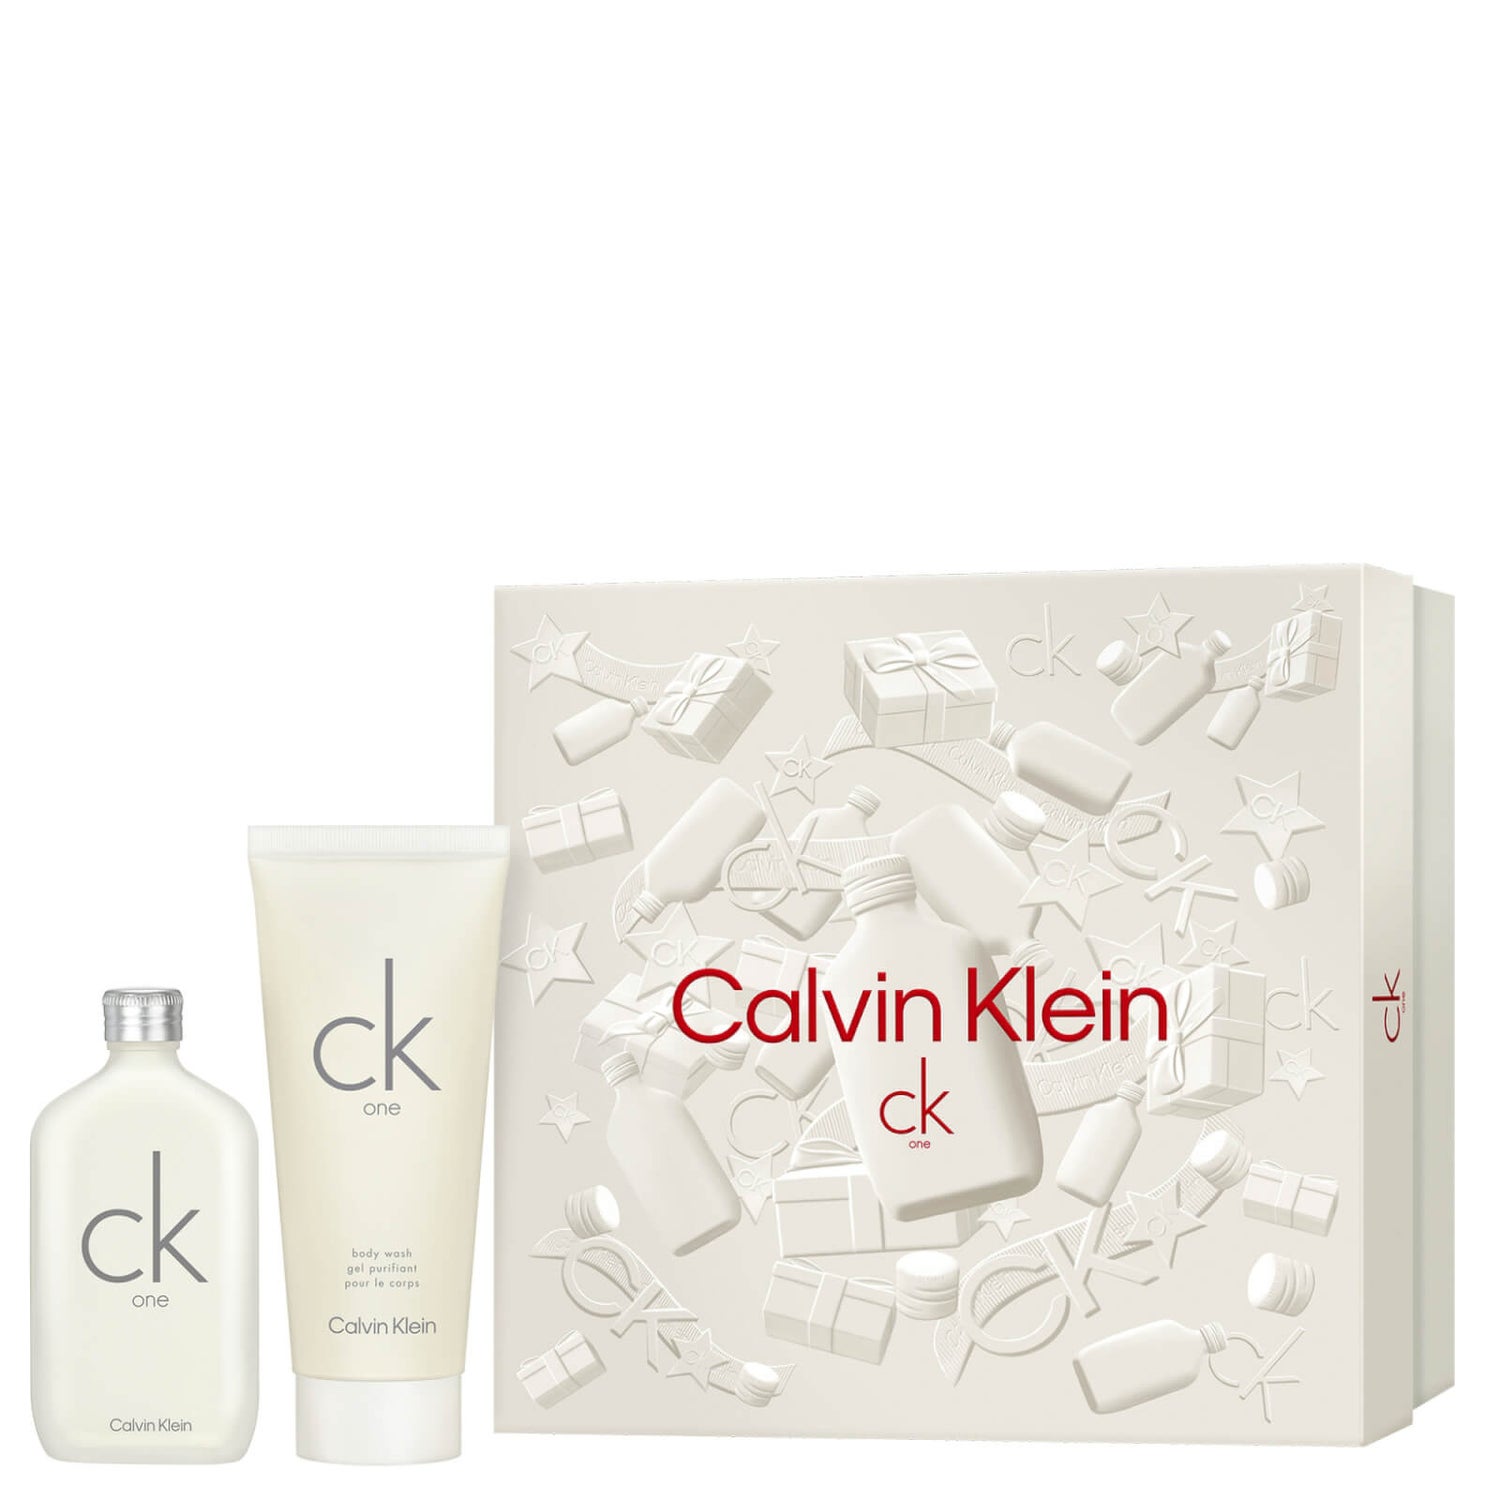 Calvin Klein CK One Eau de Toilette Gift Set